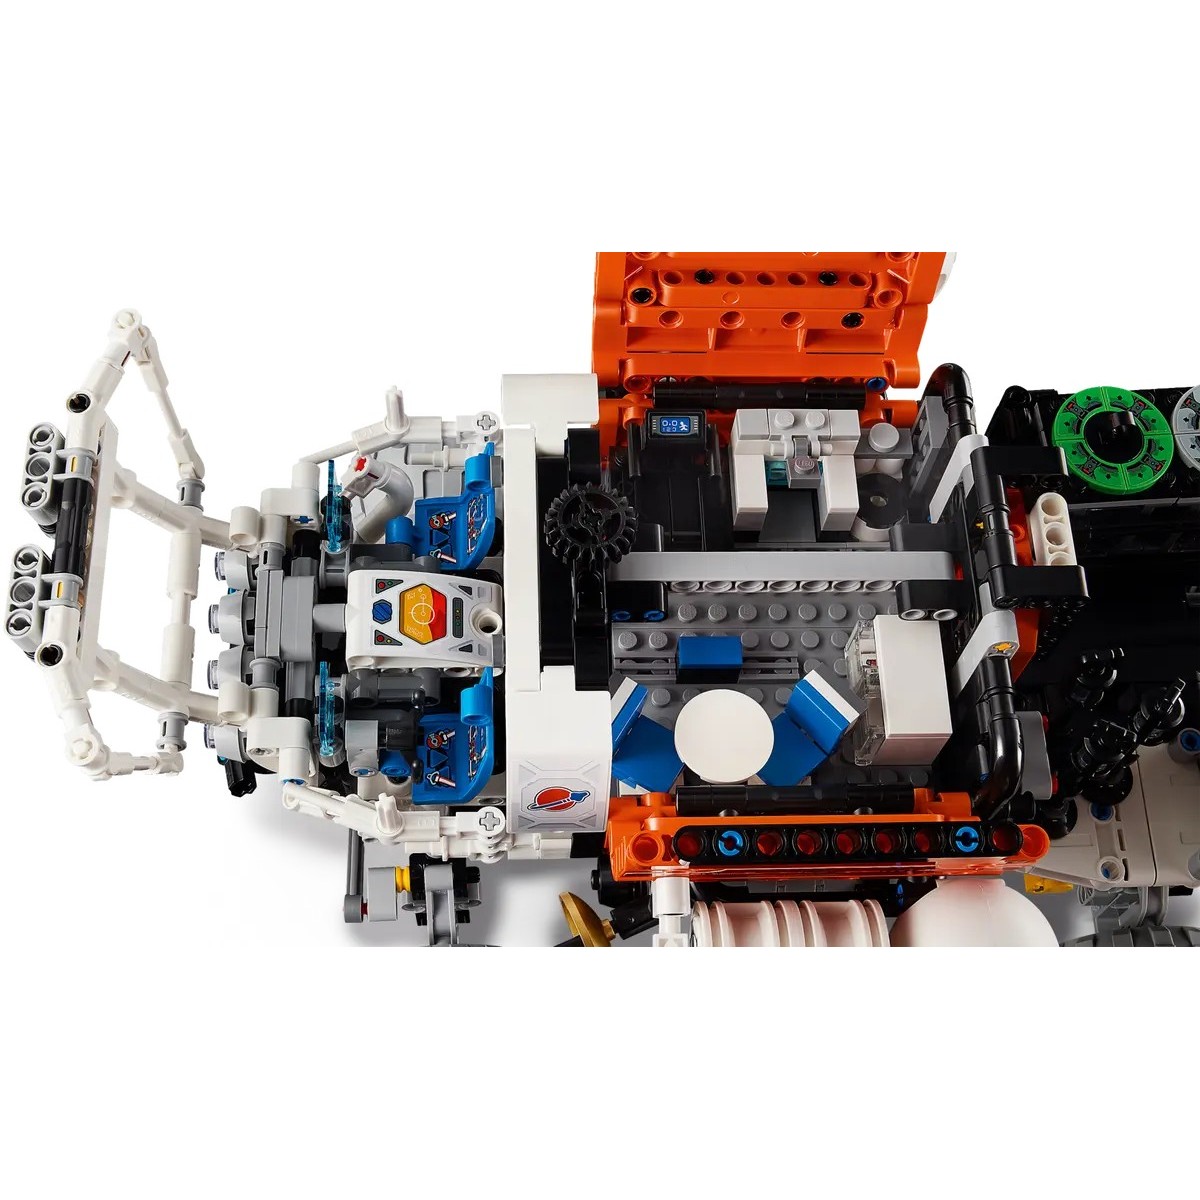 LEGO TECHNIC PRIESKUMNE VOZIDLO S POSADKOU NA MARSE /42180/